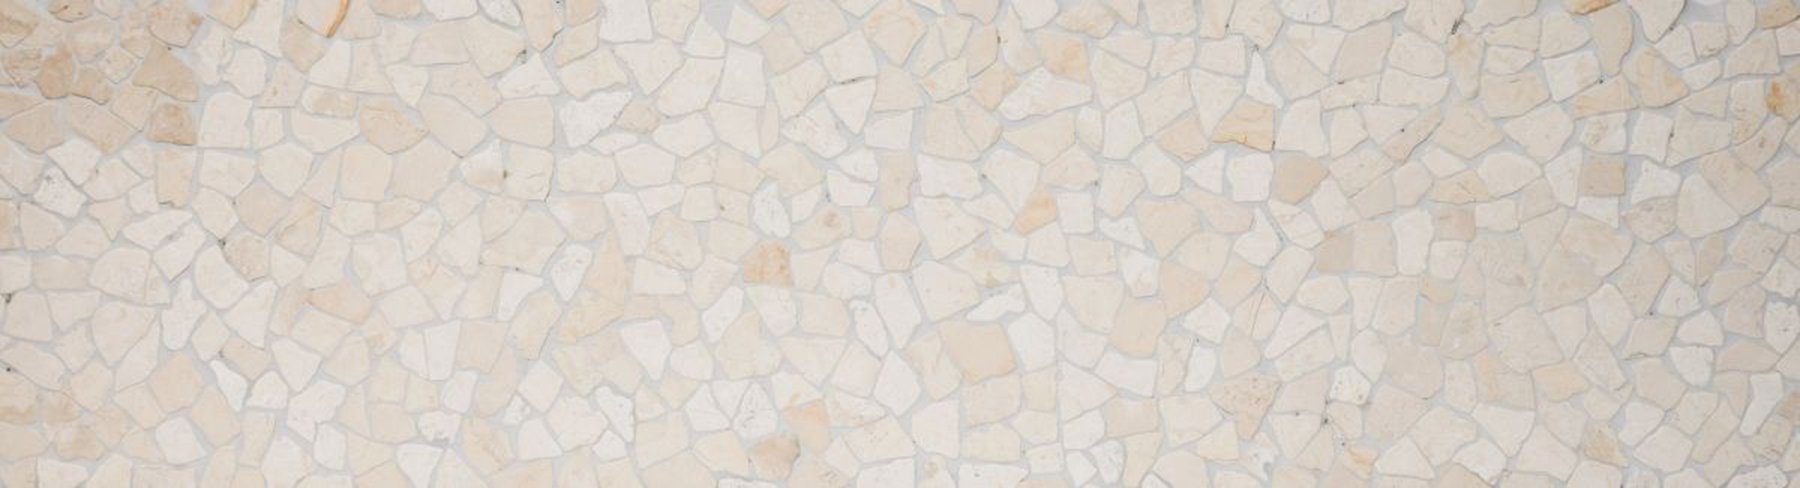 Mosani / Bruch matt Matten 10 Bodenfliese Mosaikfliesen Marmormosaik hellbeige